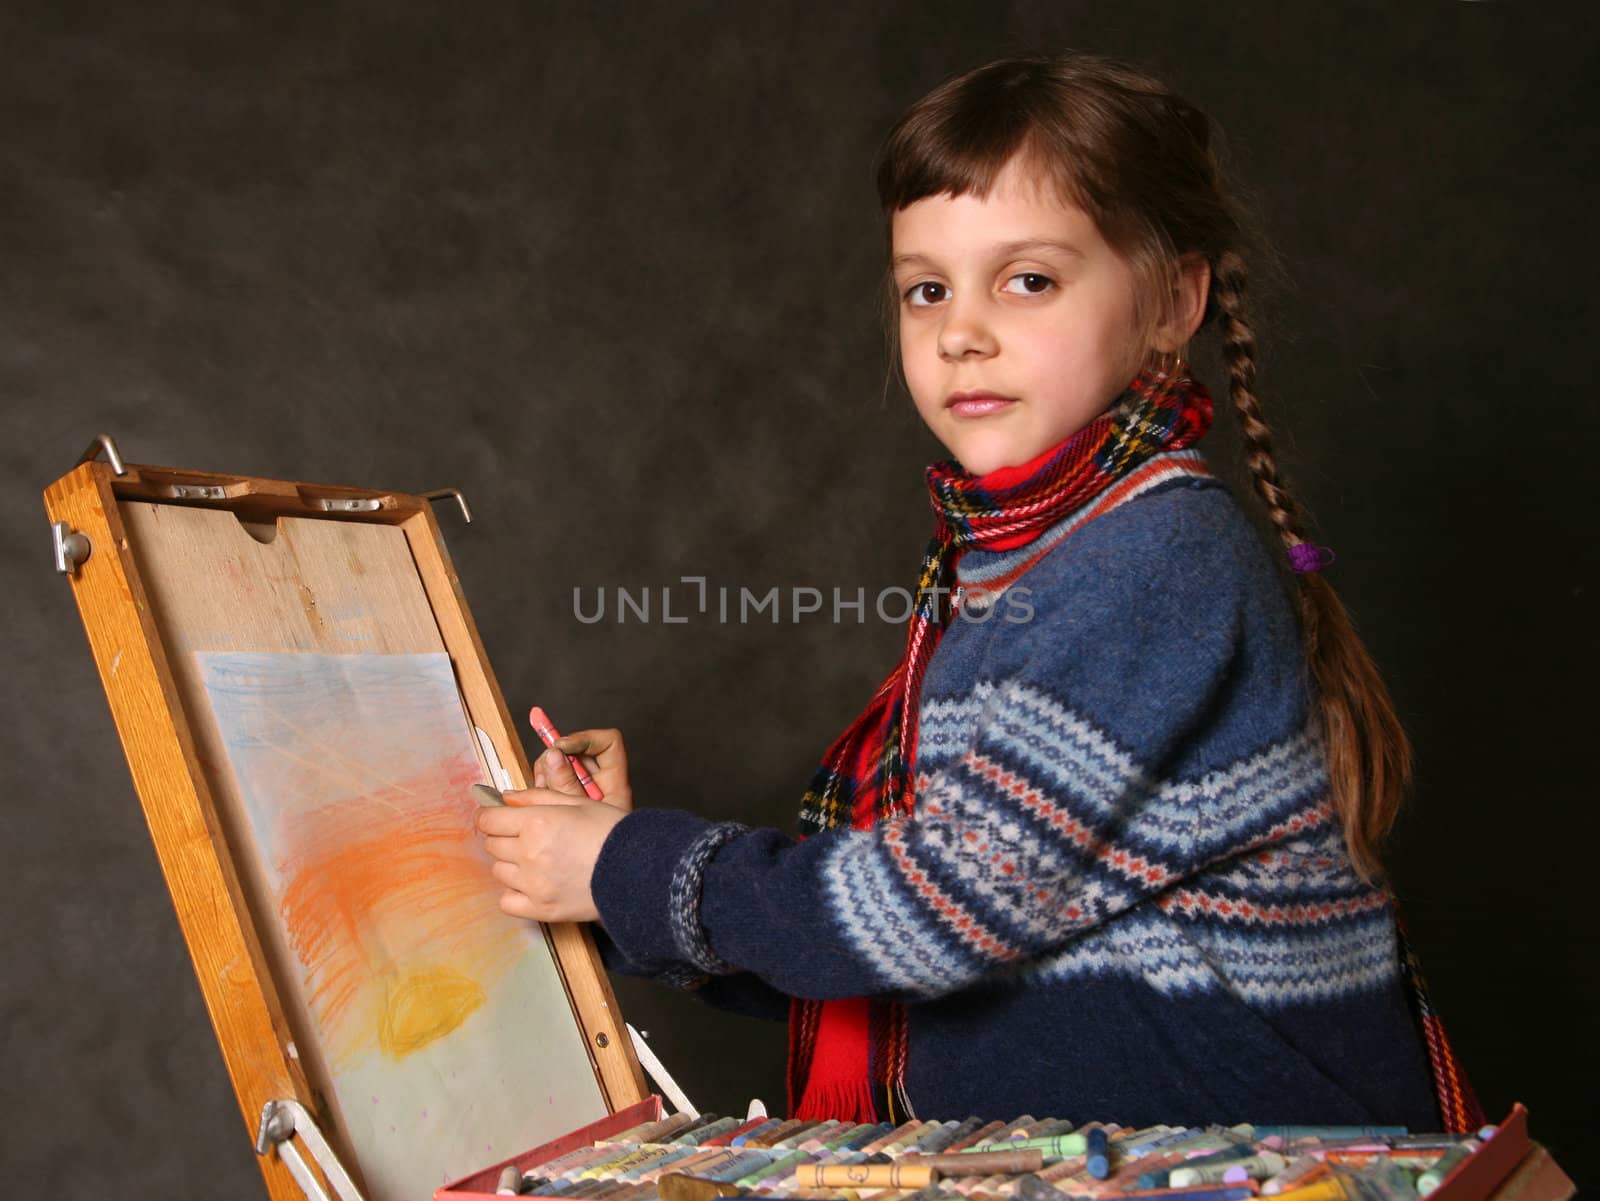 The girl draws paints in studio